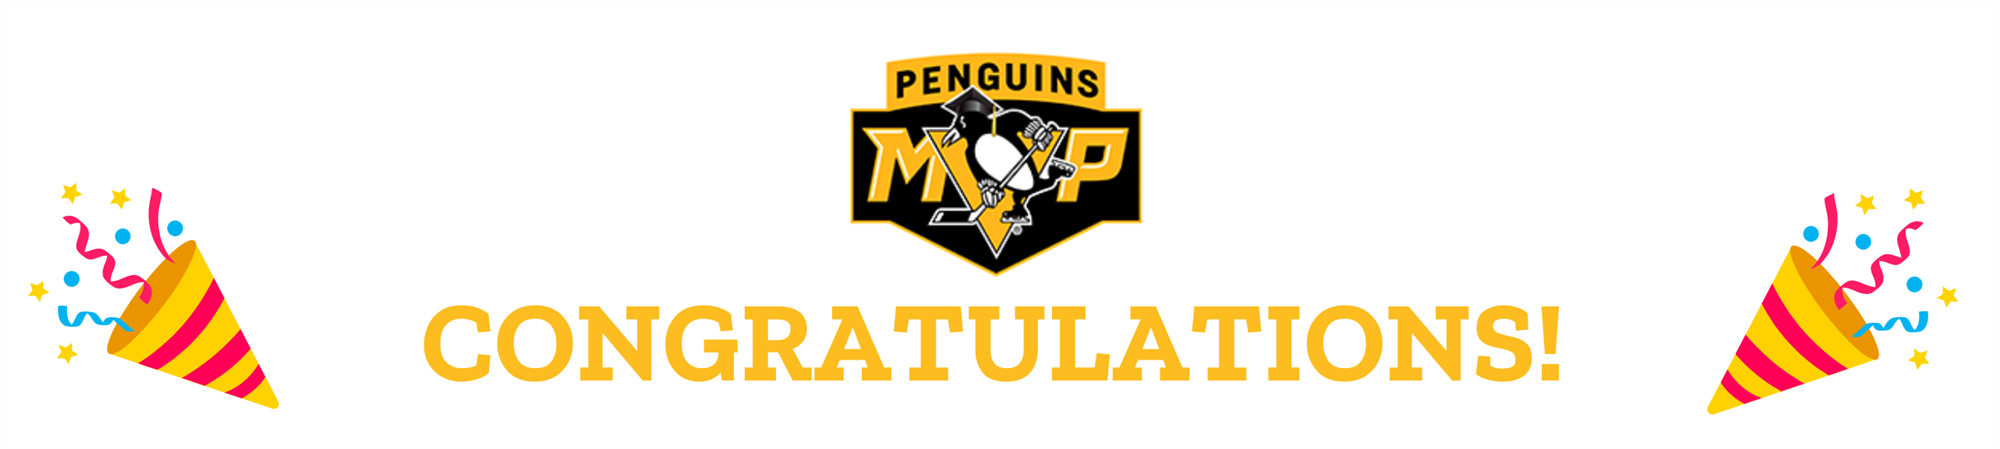 Penguins MVP Congratulations!